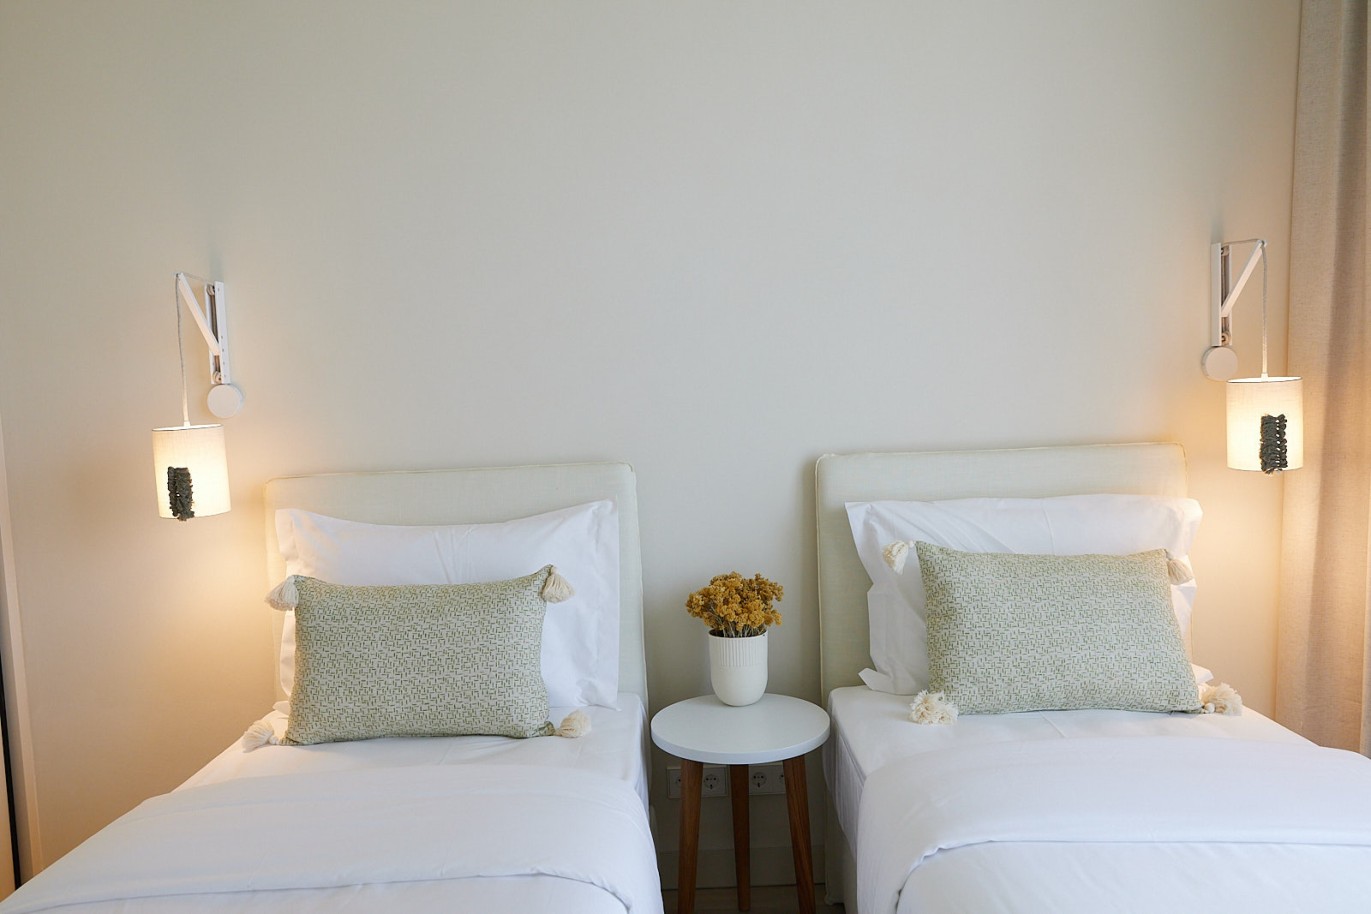 3 bedroom apartment in resort, for sale in Porches, Algarve_230725